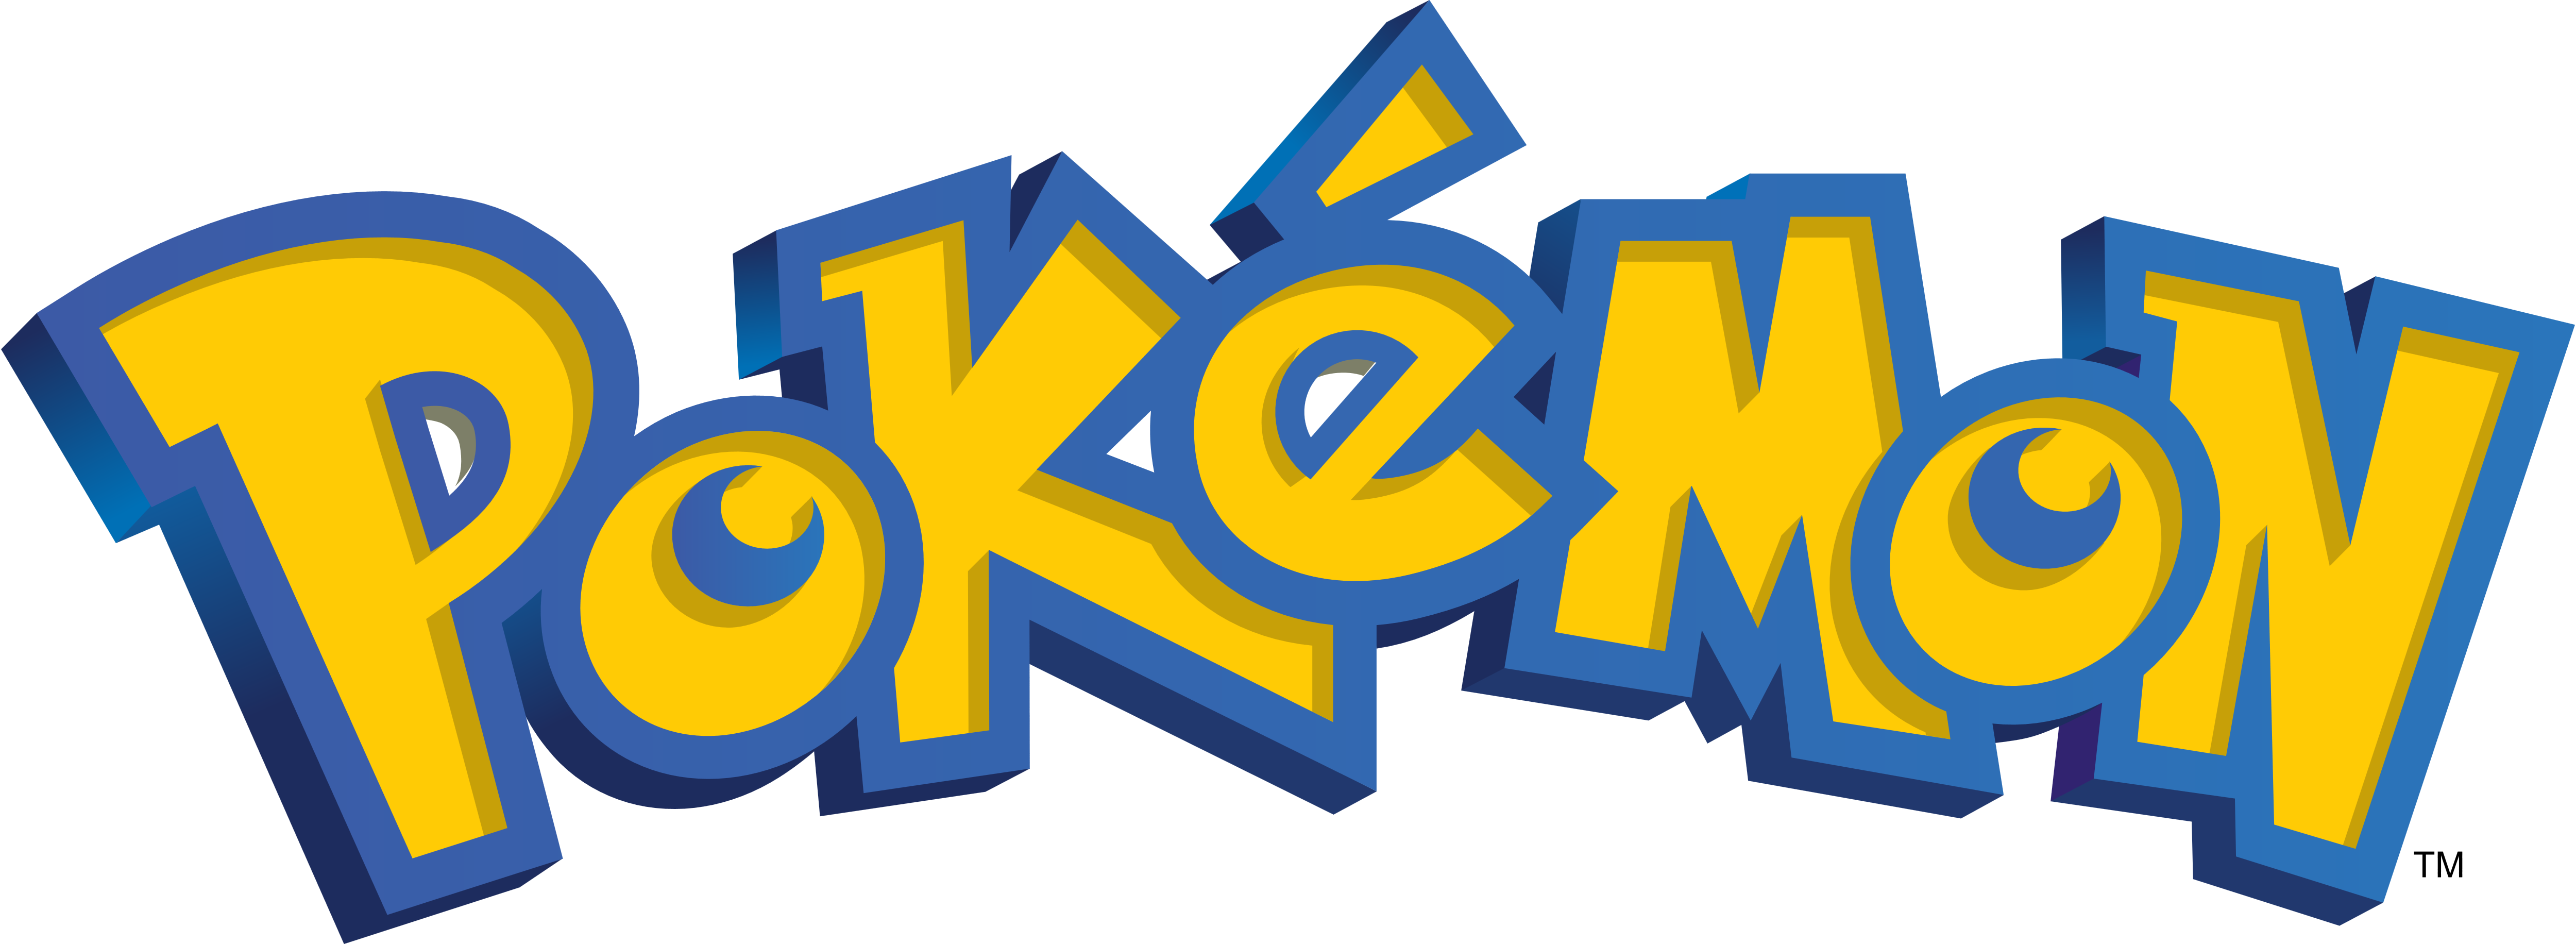 Pokémon Go – Logos Download5000 x 1832